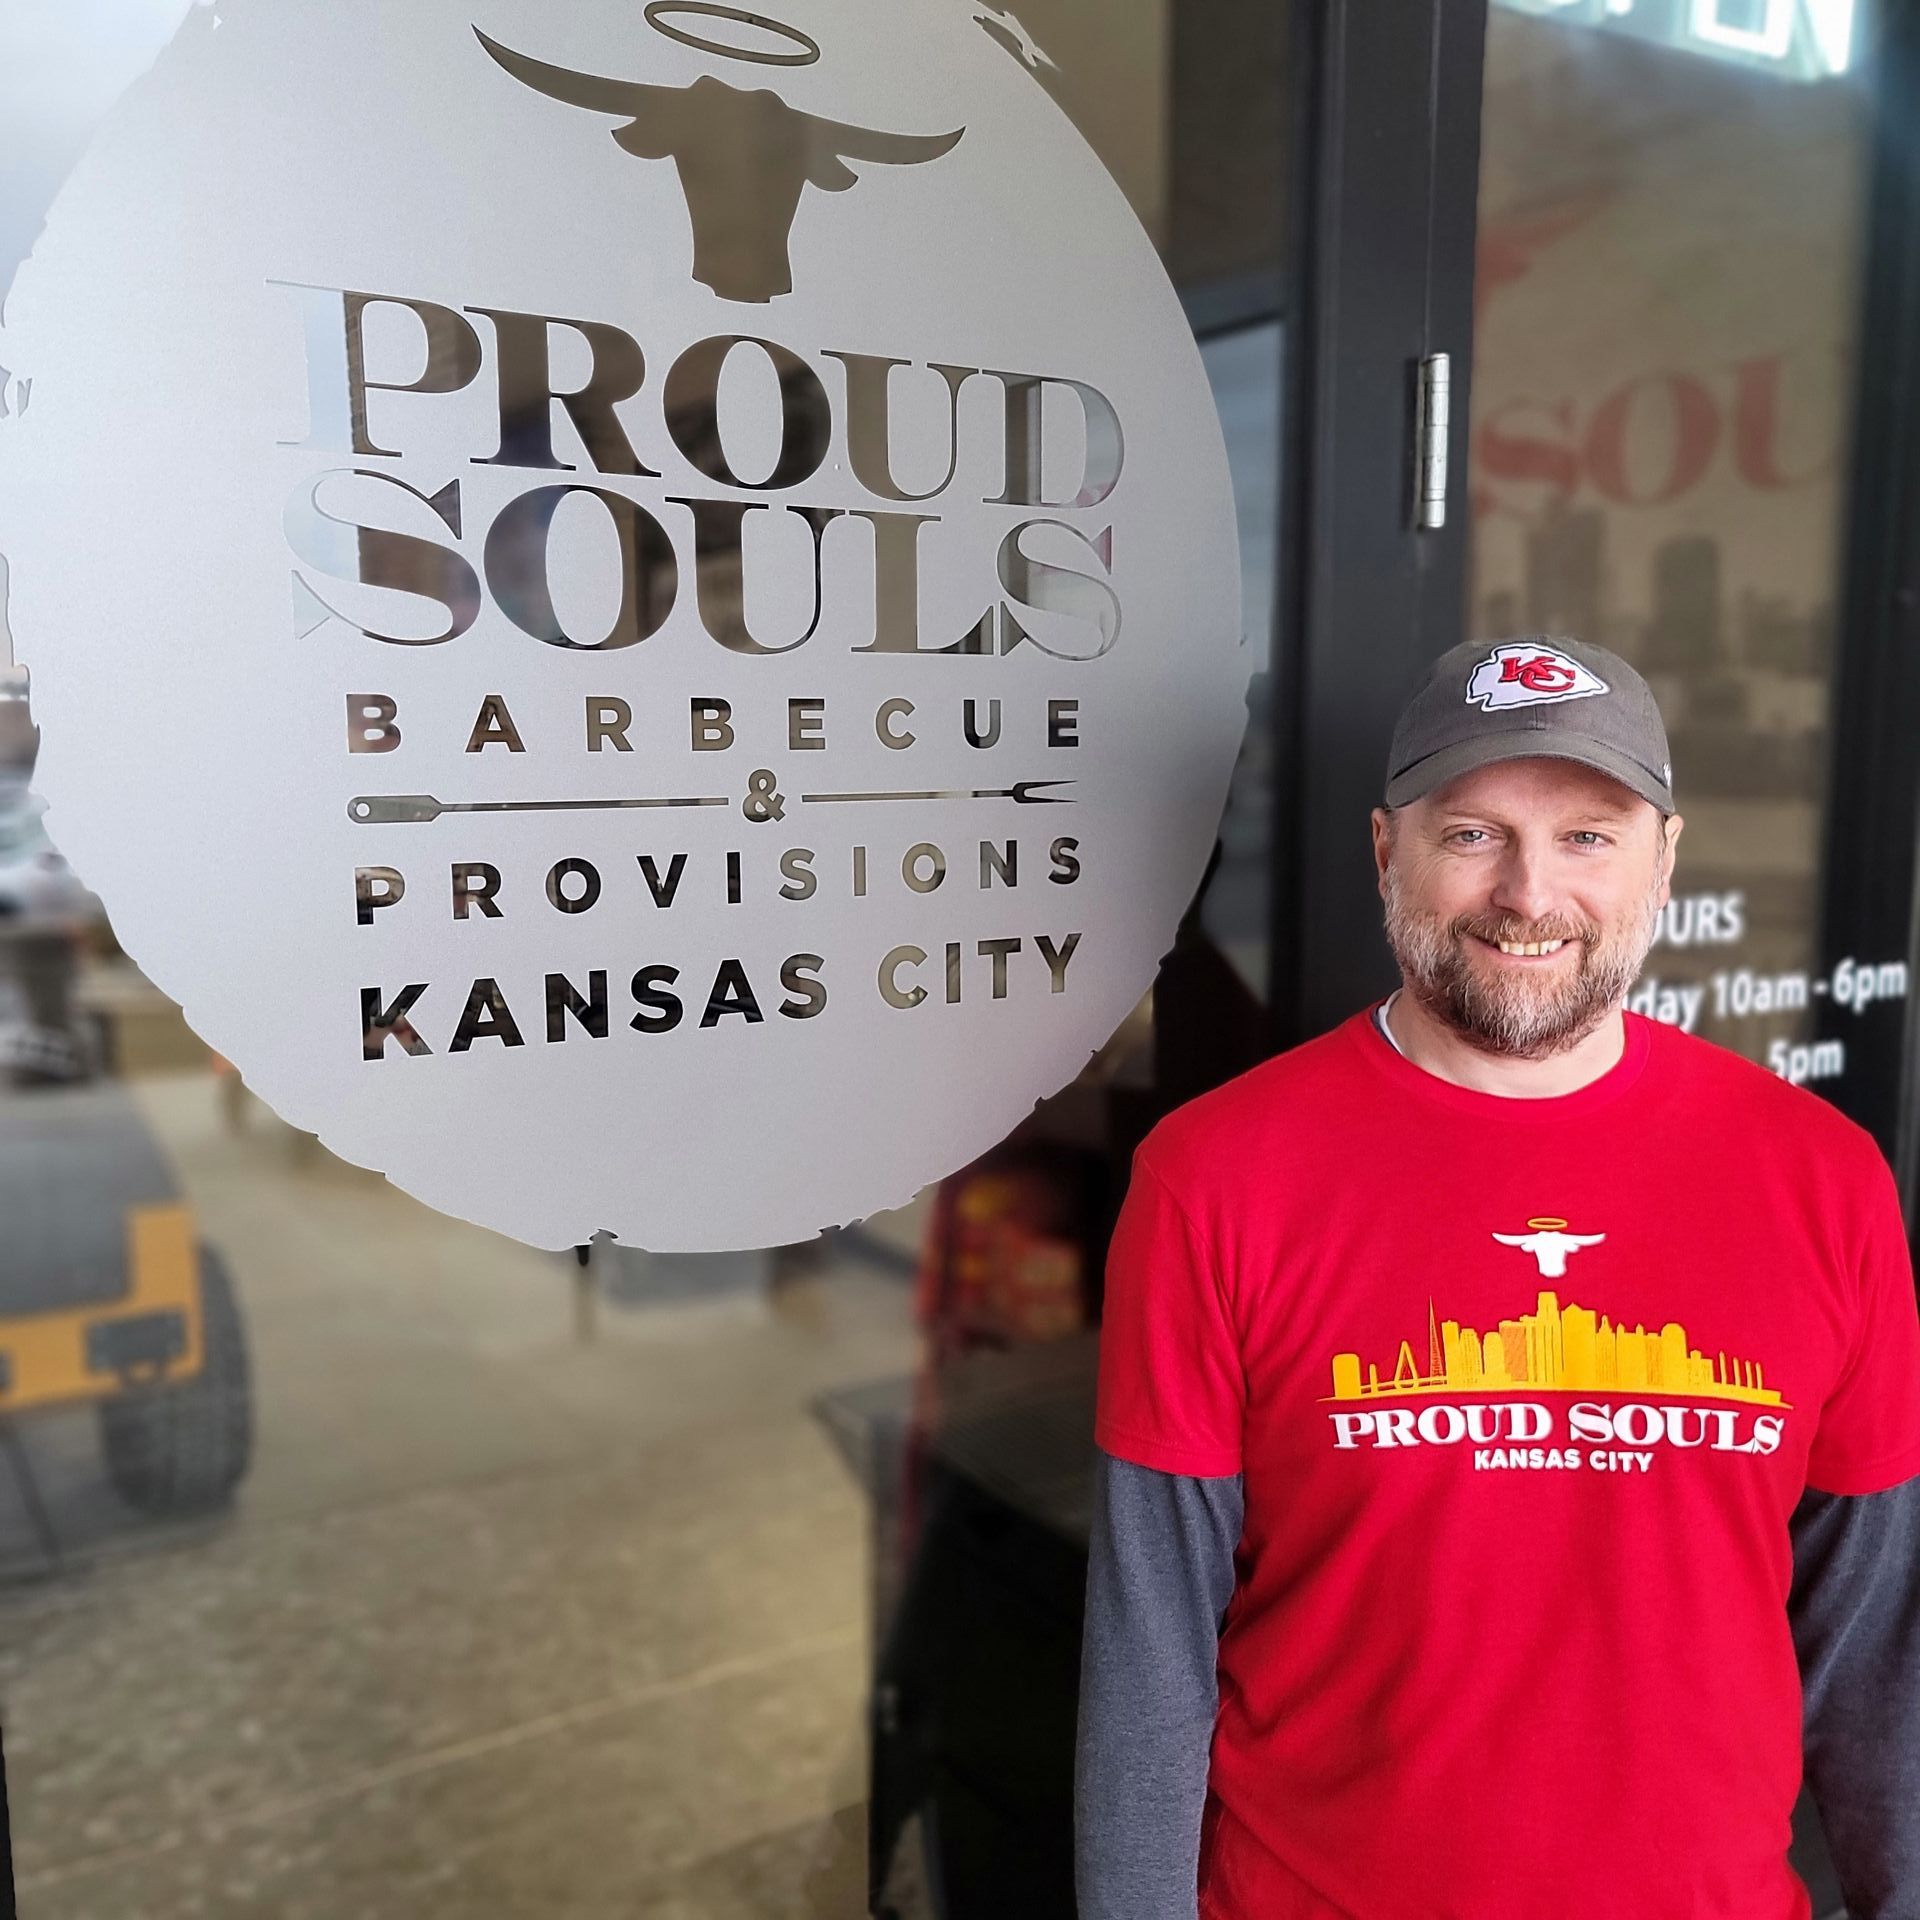 Greg Turley, Sales Associate at Proud Souls Barbecue Kansas City